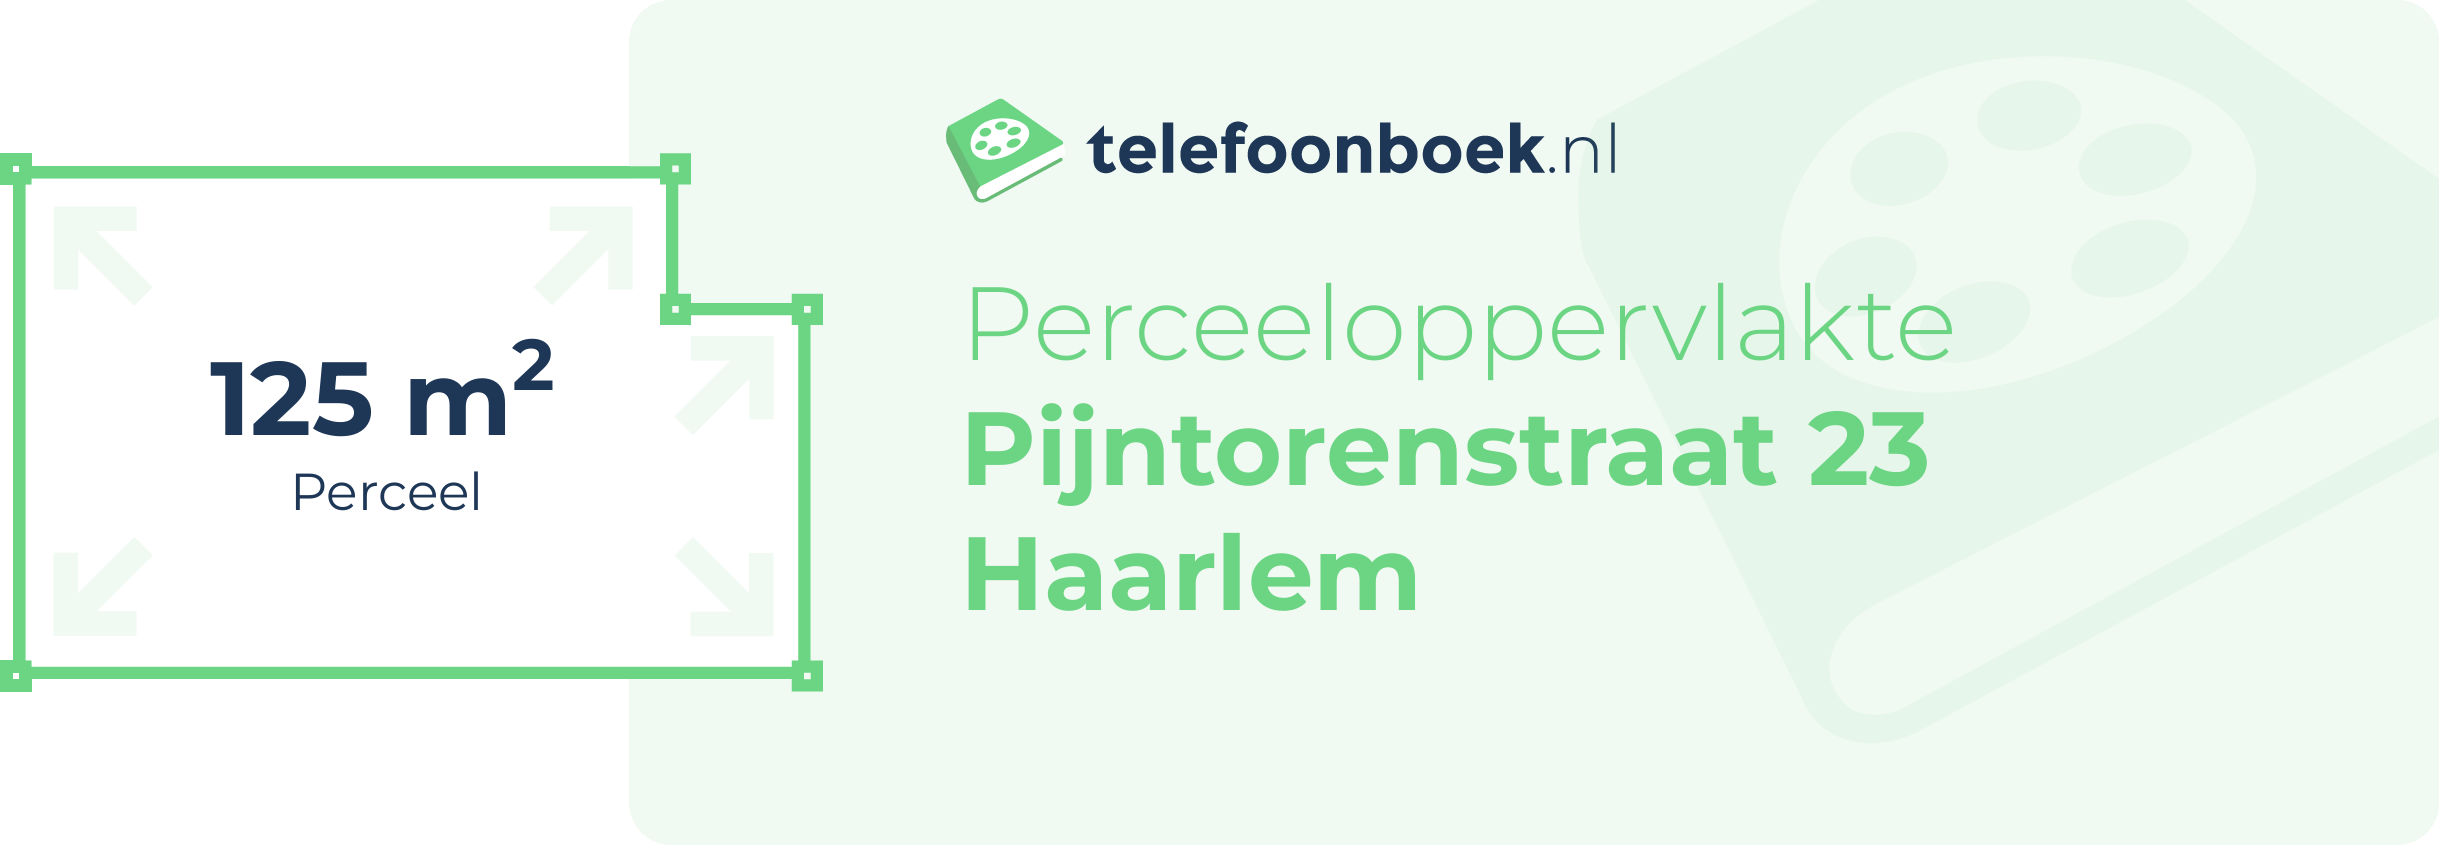 Perceeloppervlakte Pijntorenstraat 23 Haarlem